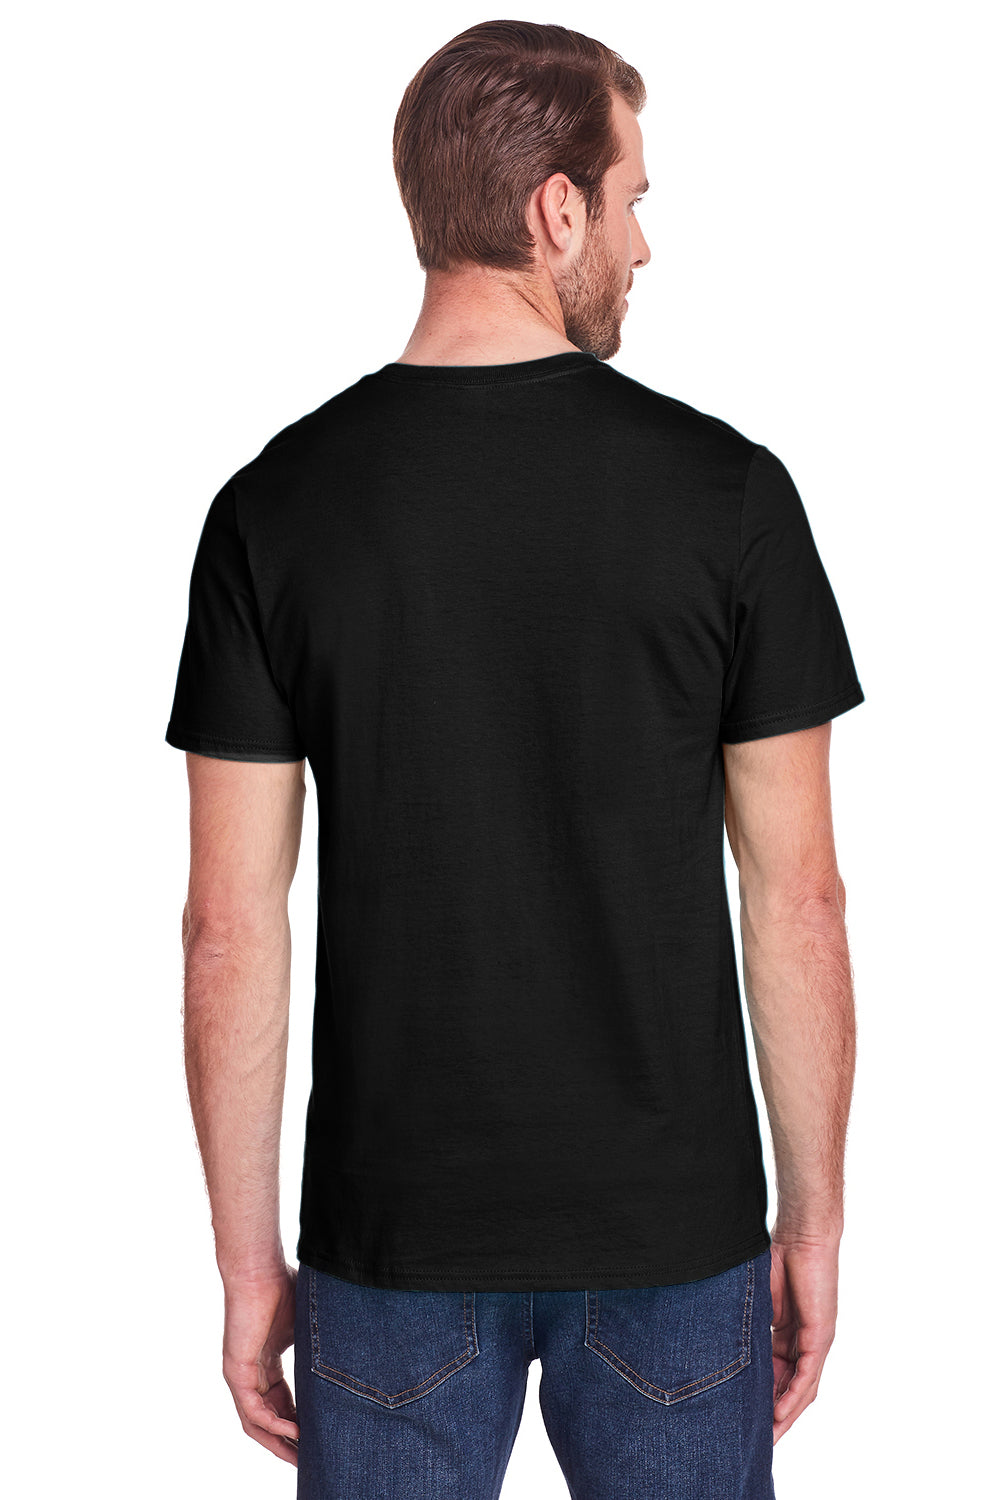 Fruit Of The Loom IC47MR Mens Iconic Short Sleeve Crewneck T-Shirt Black Back